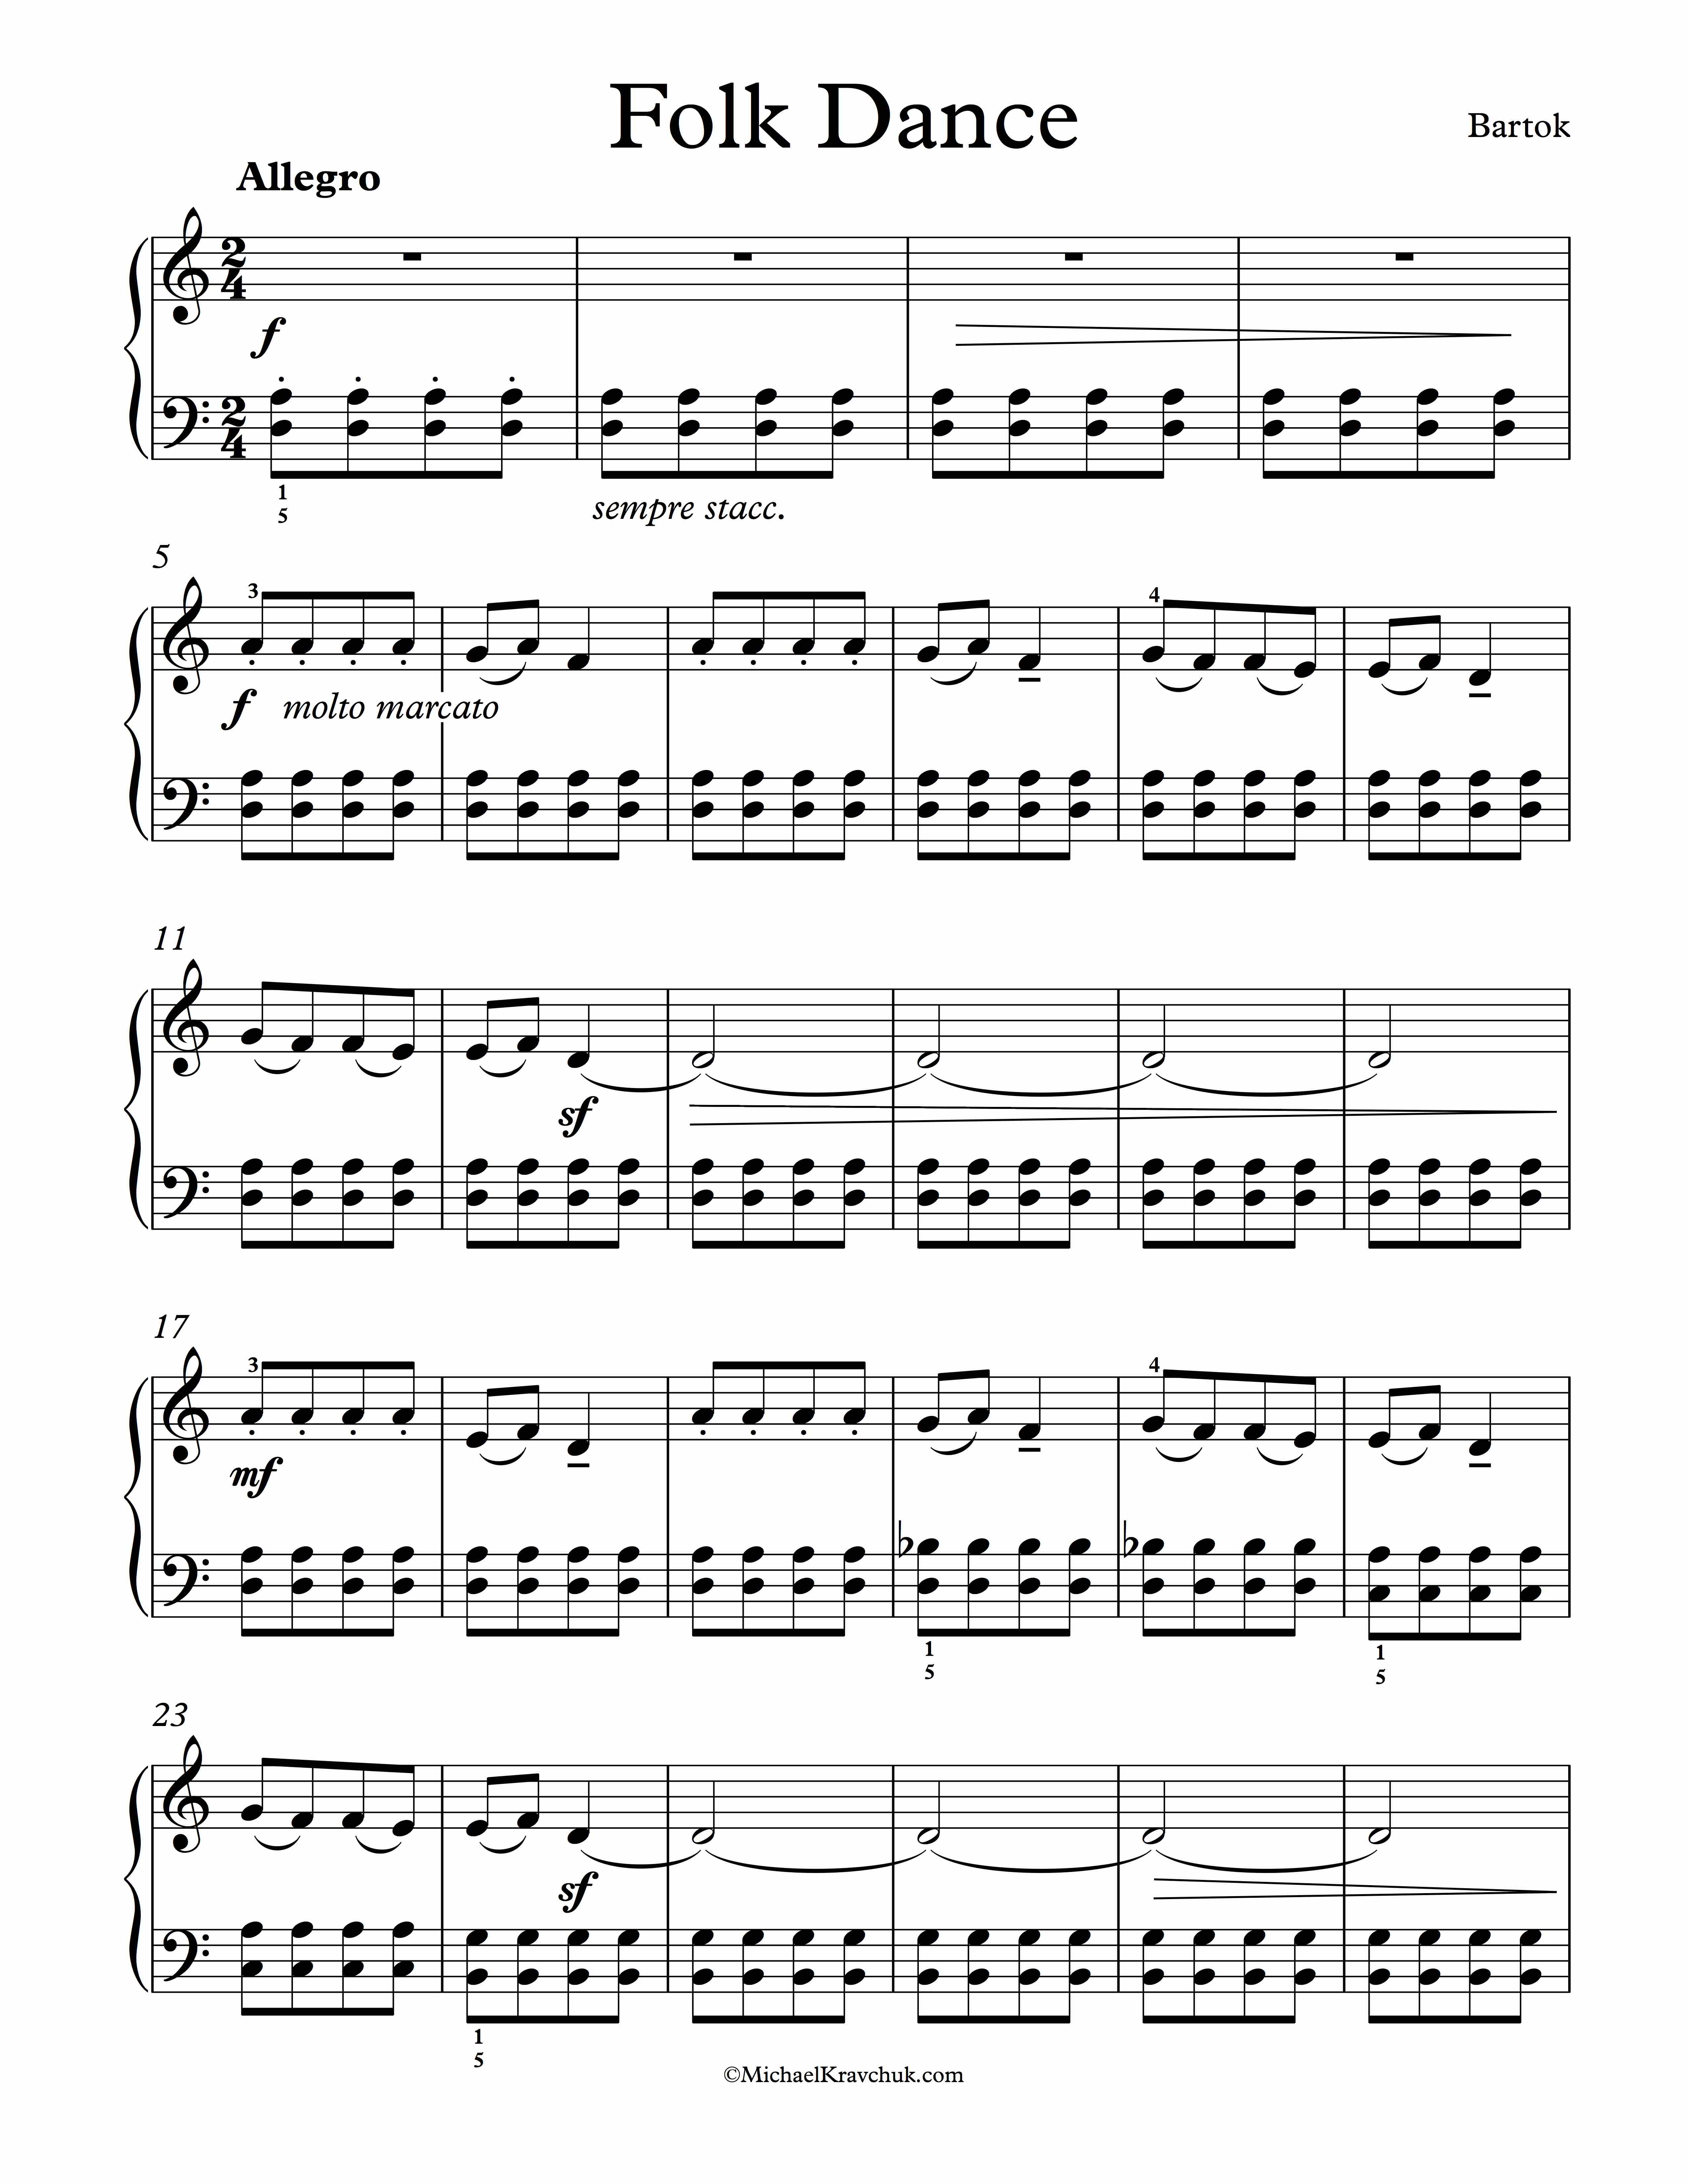 Free Piano Sheet Music - Folk Dance - From For Children Vol. 1 - Bartok